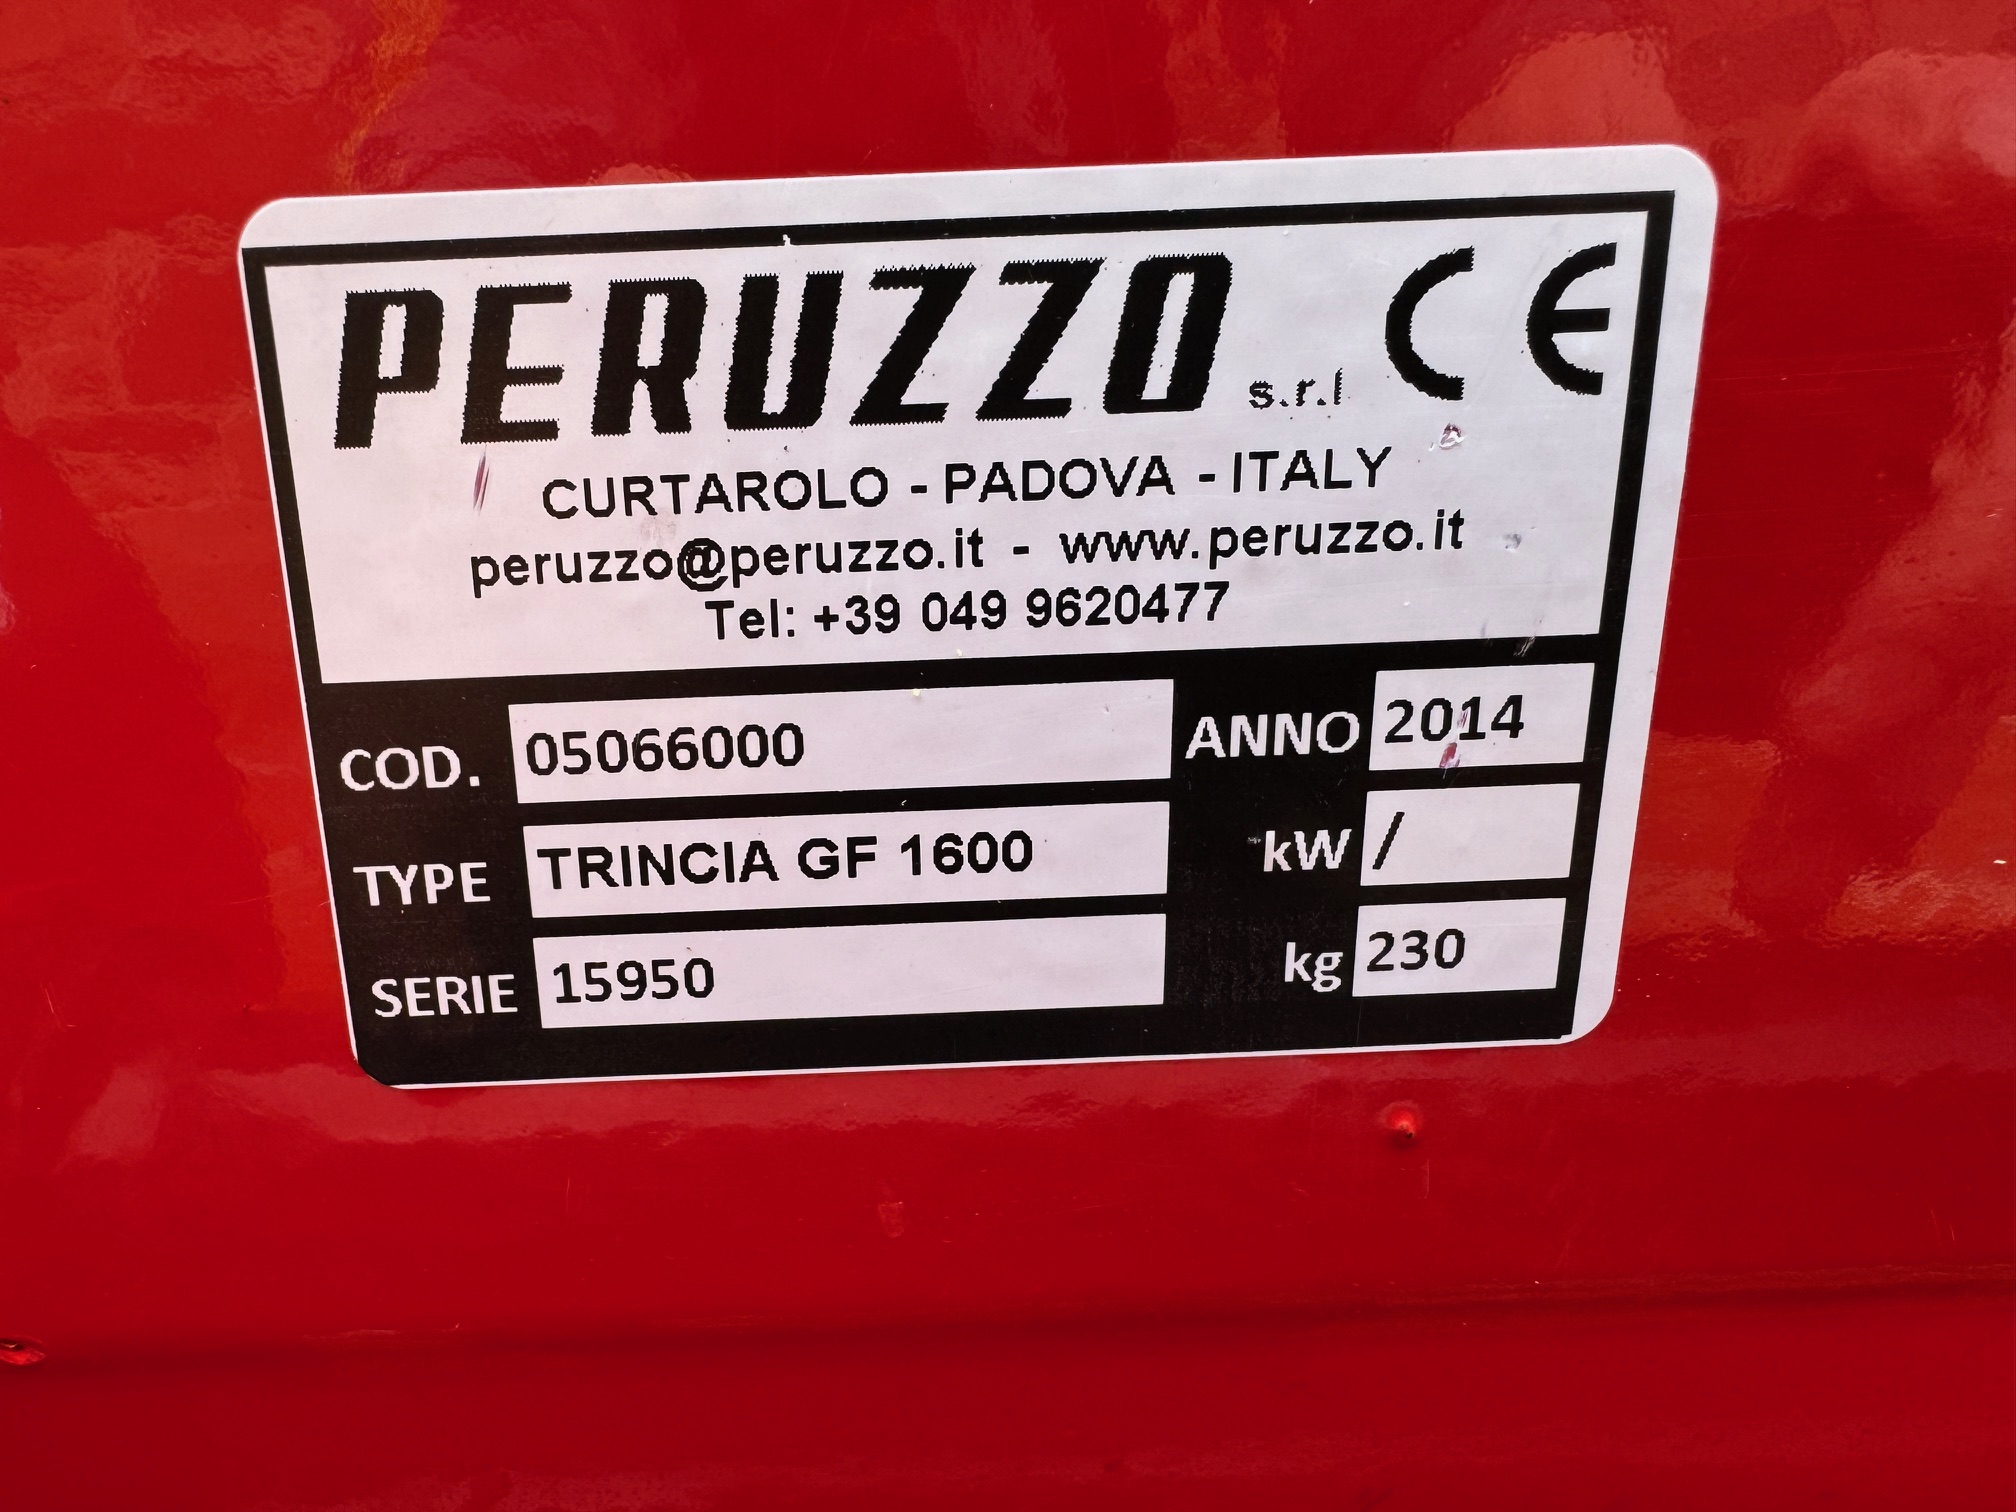 Gianni ferrari flail deck / Peruzzo trincia GF 1600